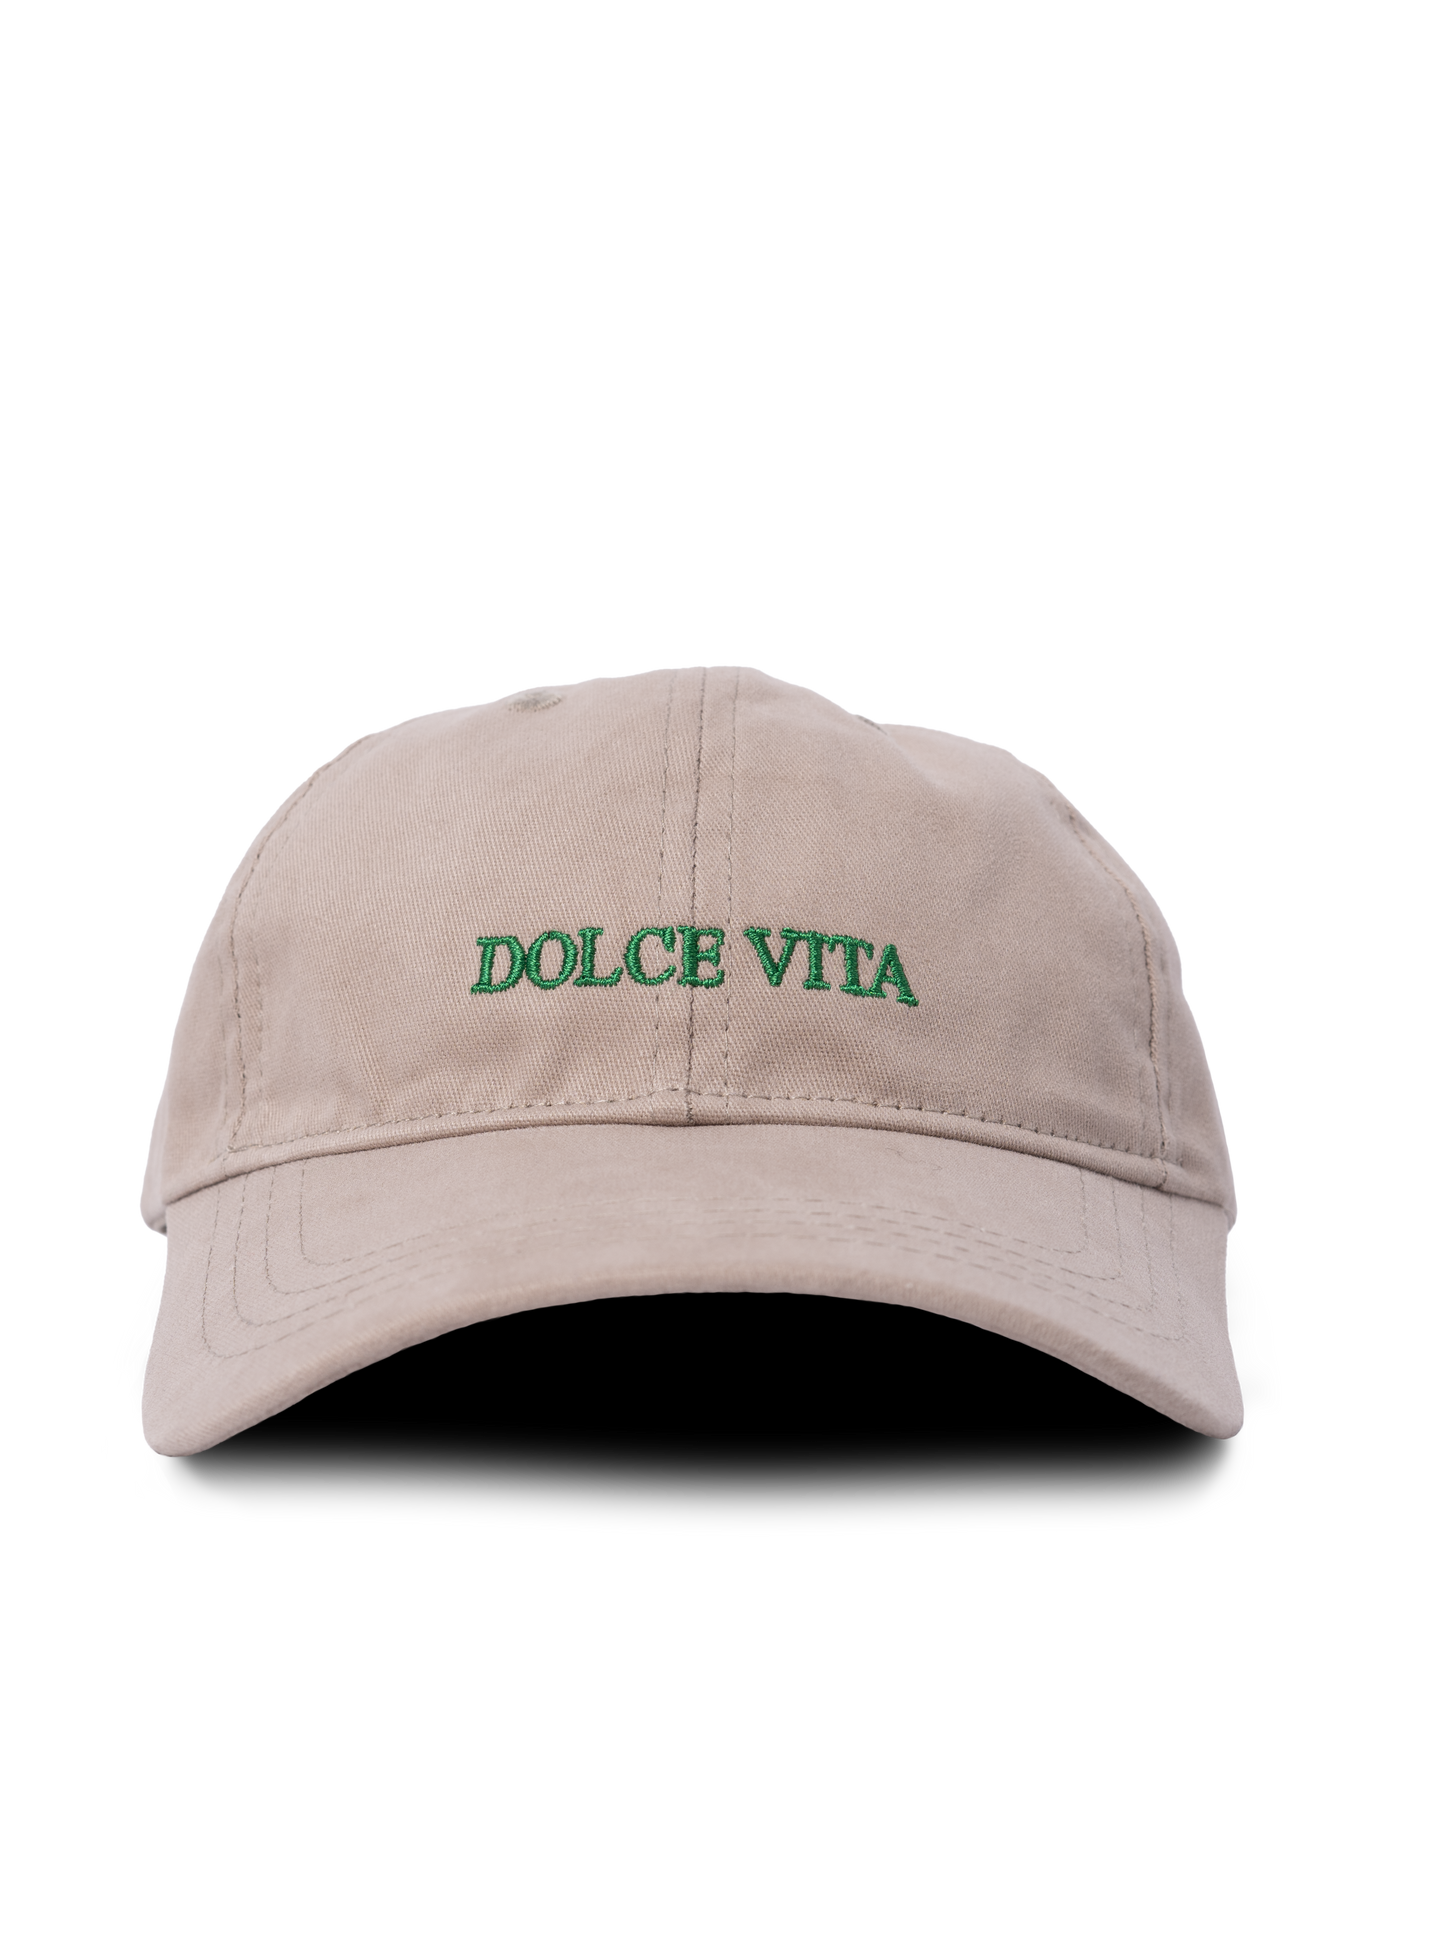 The Dolce Vita Cap